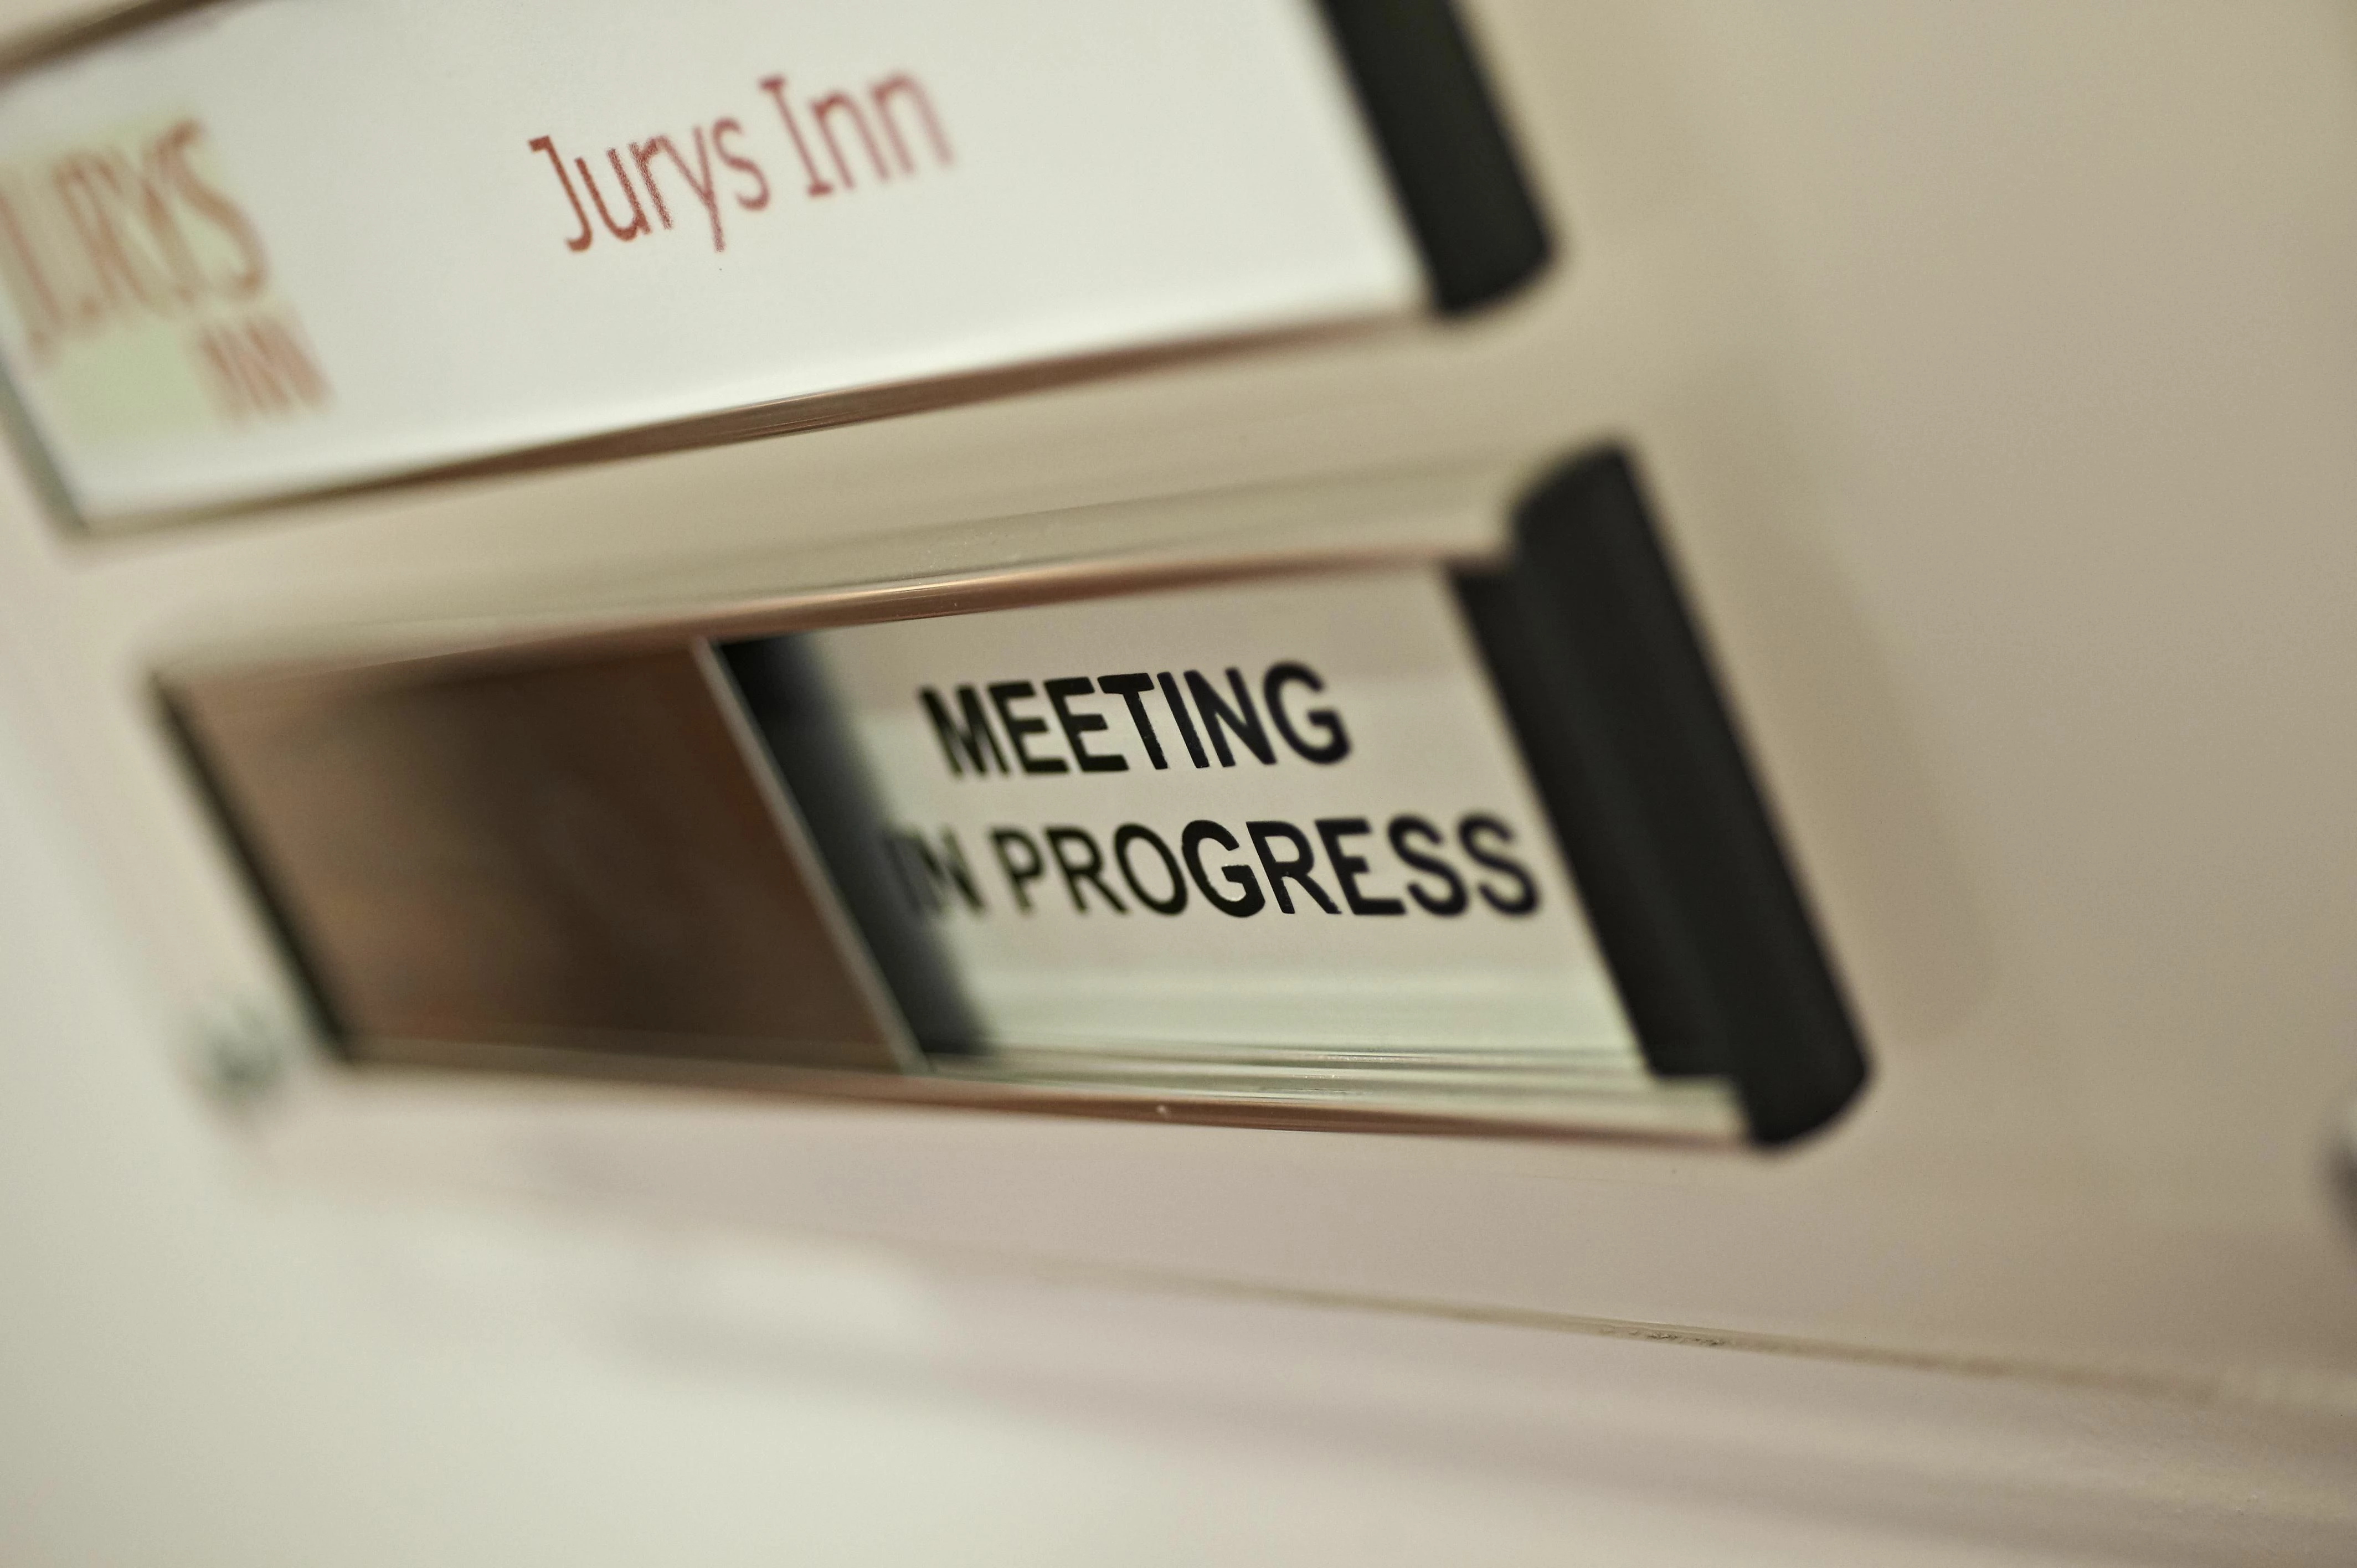 Jurys Inn meeting